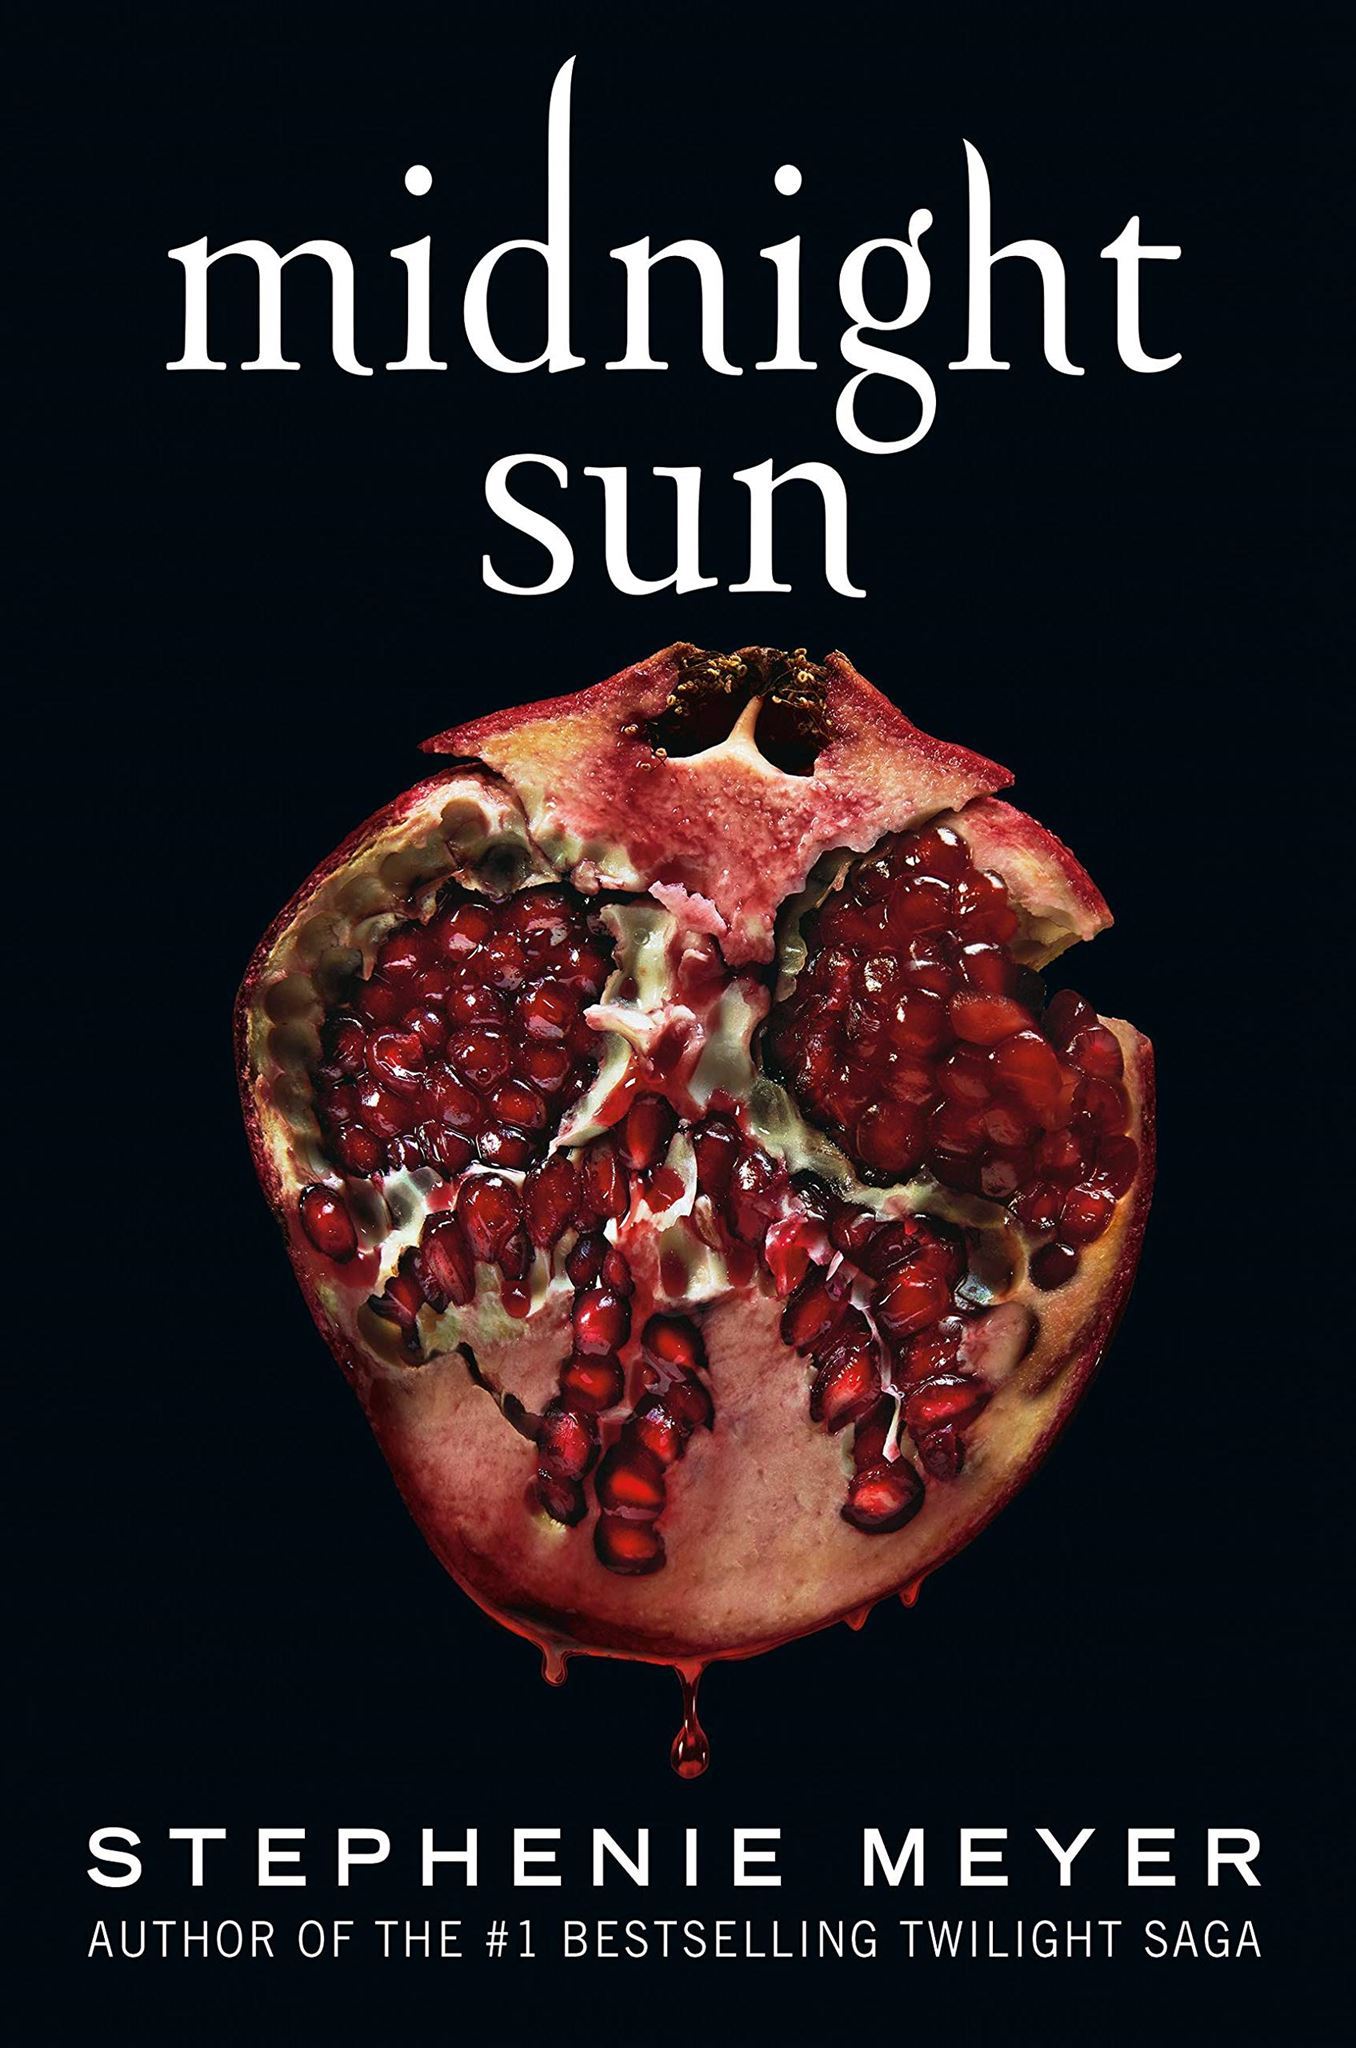 Midnight Sun [Hardcover] 2020 by Stephenie Meyer - LV'S Global Media